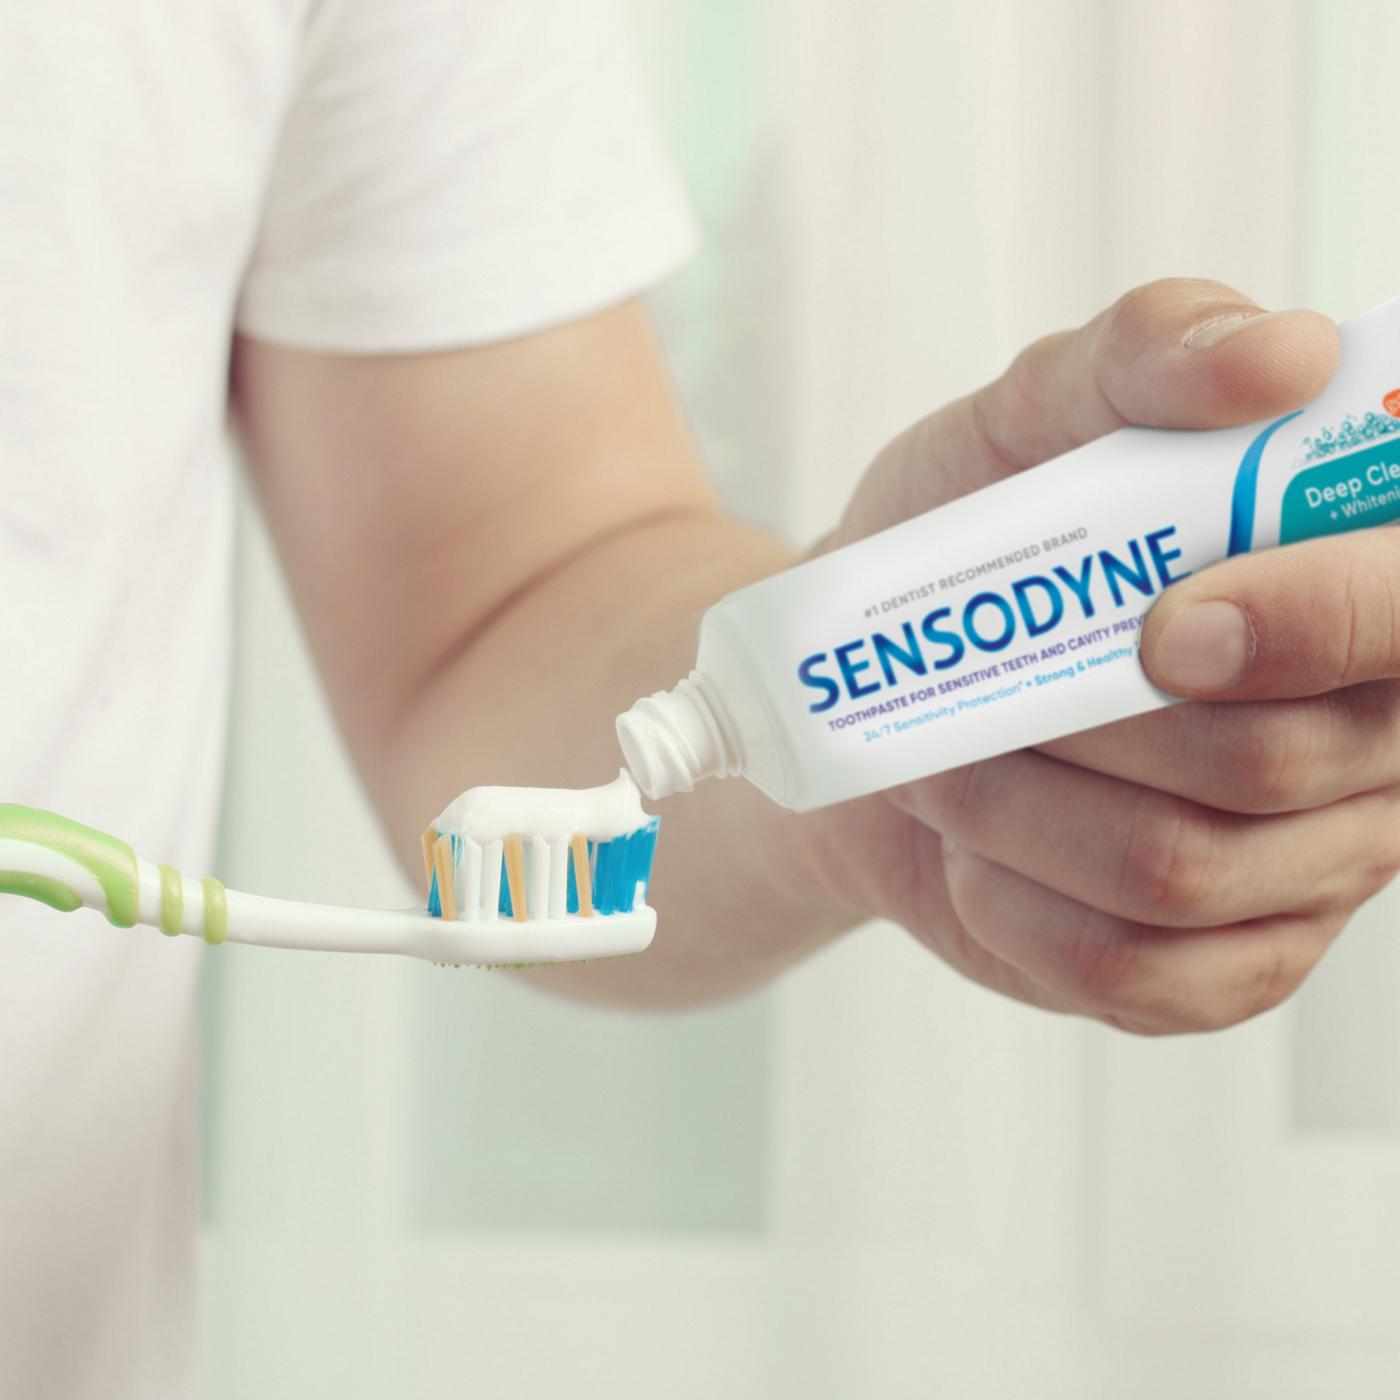 Sensodyne Sensitive Toothpaste - Deep Clean + Whitening; image 2 of 8